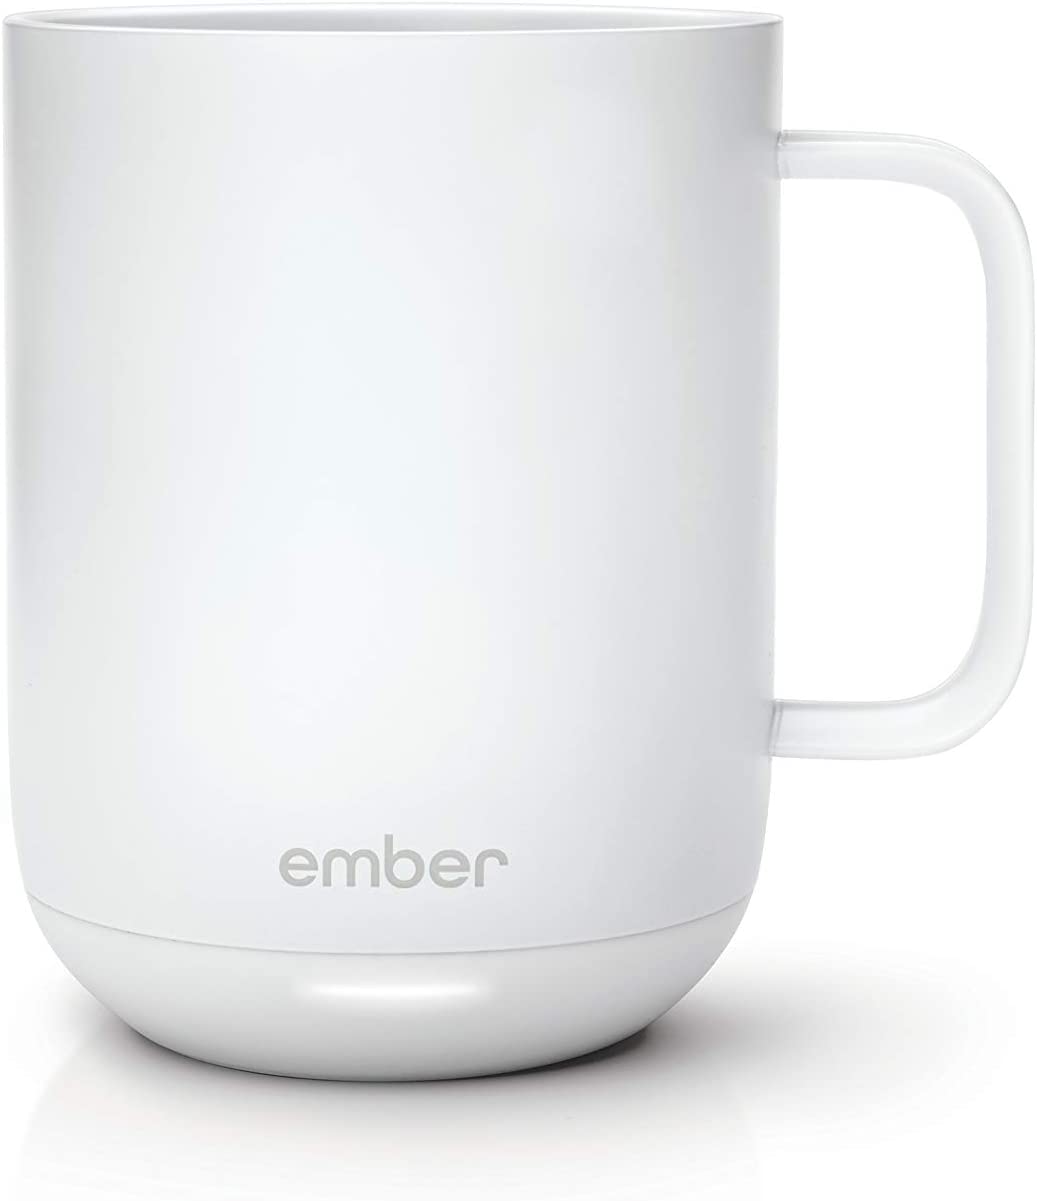 Should the Ember ceramic coffee mug be smart?